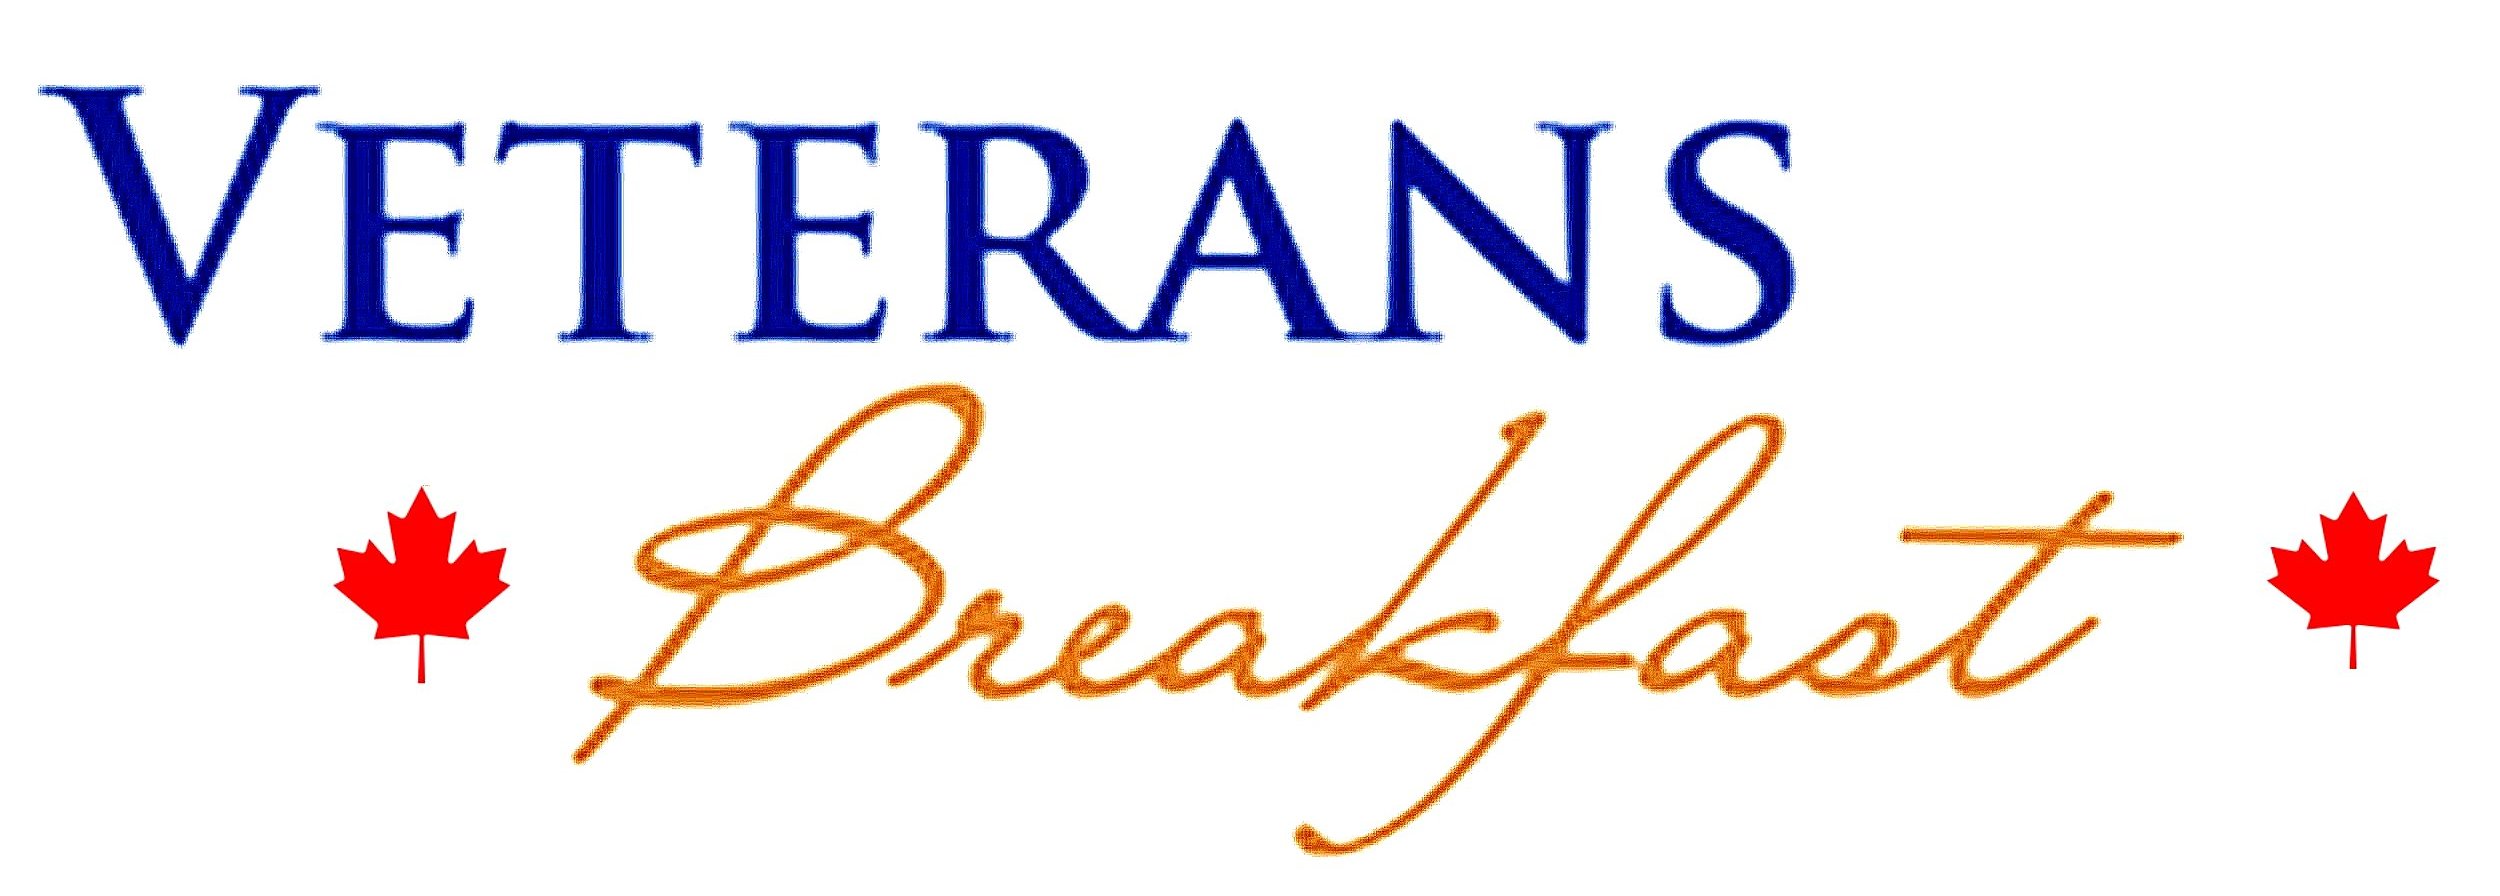 Veterans Breakfast Google image from http://www.crawfordfarmshoa.com/